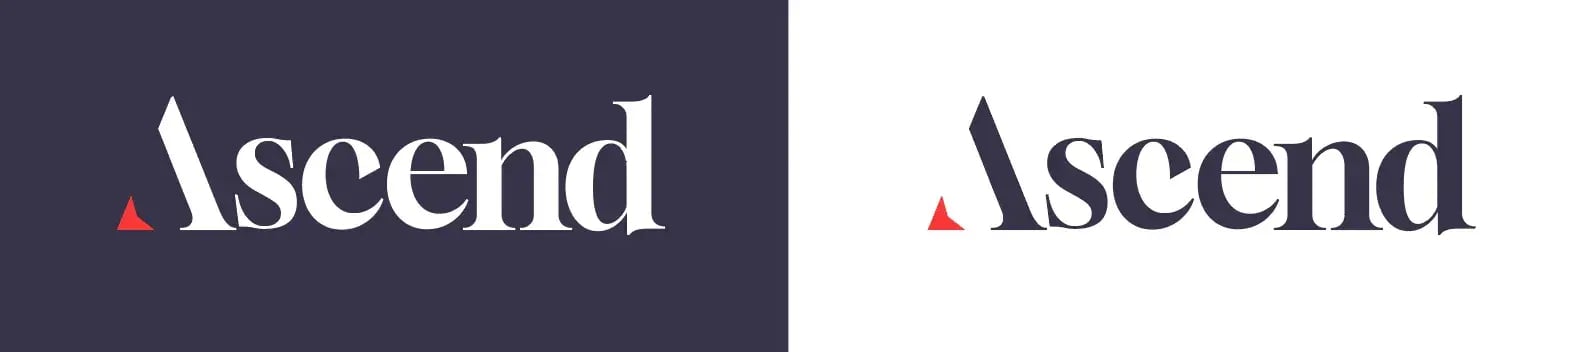 Asecnd-new-logo